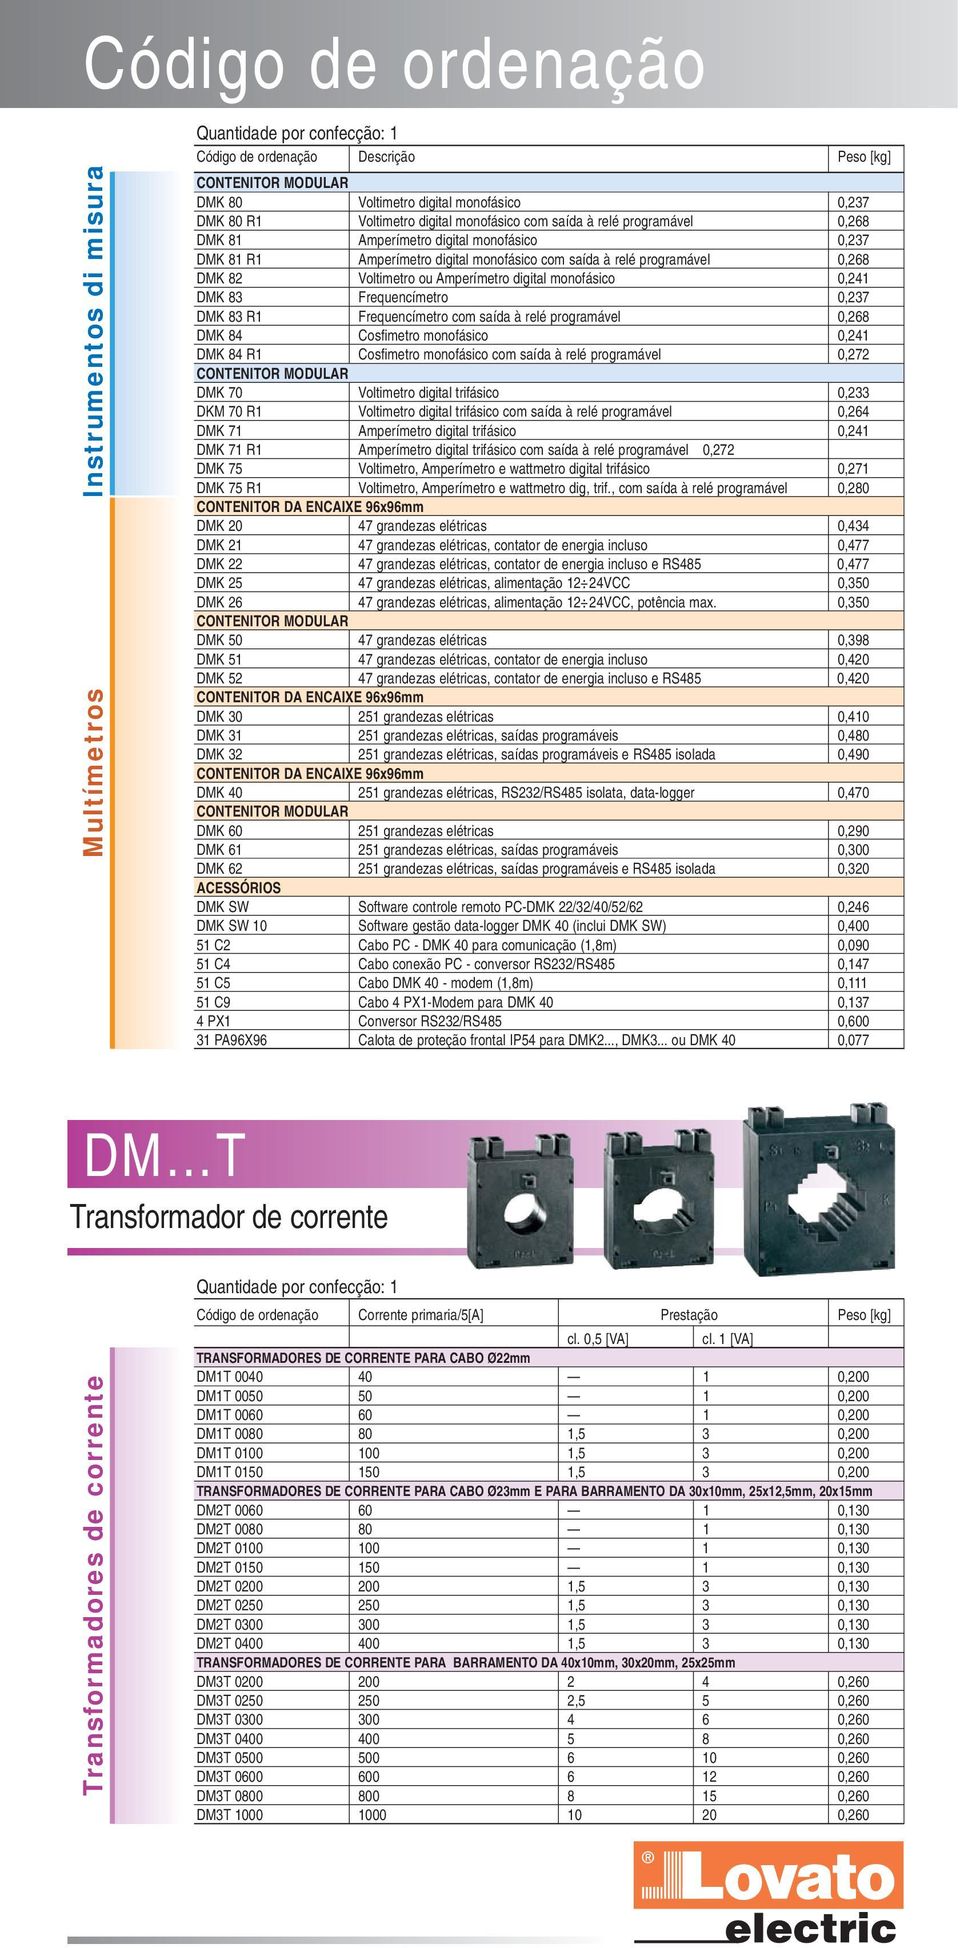 digital monofásico,241 DMK 83 Frequencímetro,237 DMK 83 R1 Frequencímetro com saída à relé programável,268 DMK 84 Cosfimetro monofásico,241 DMK 84 R1 Cosfimetro monofásico com saída à relé